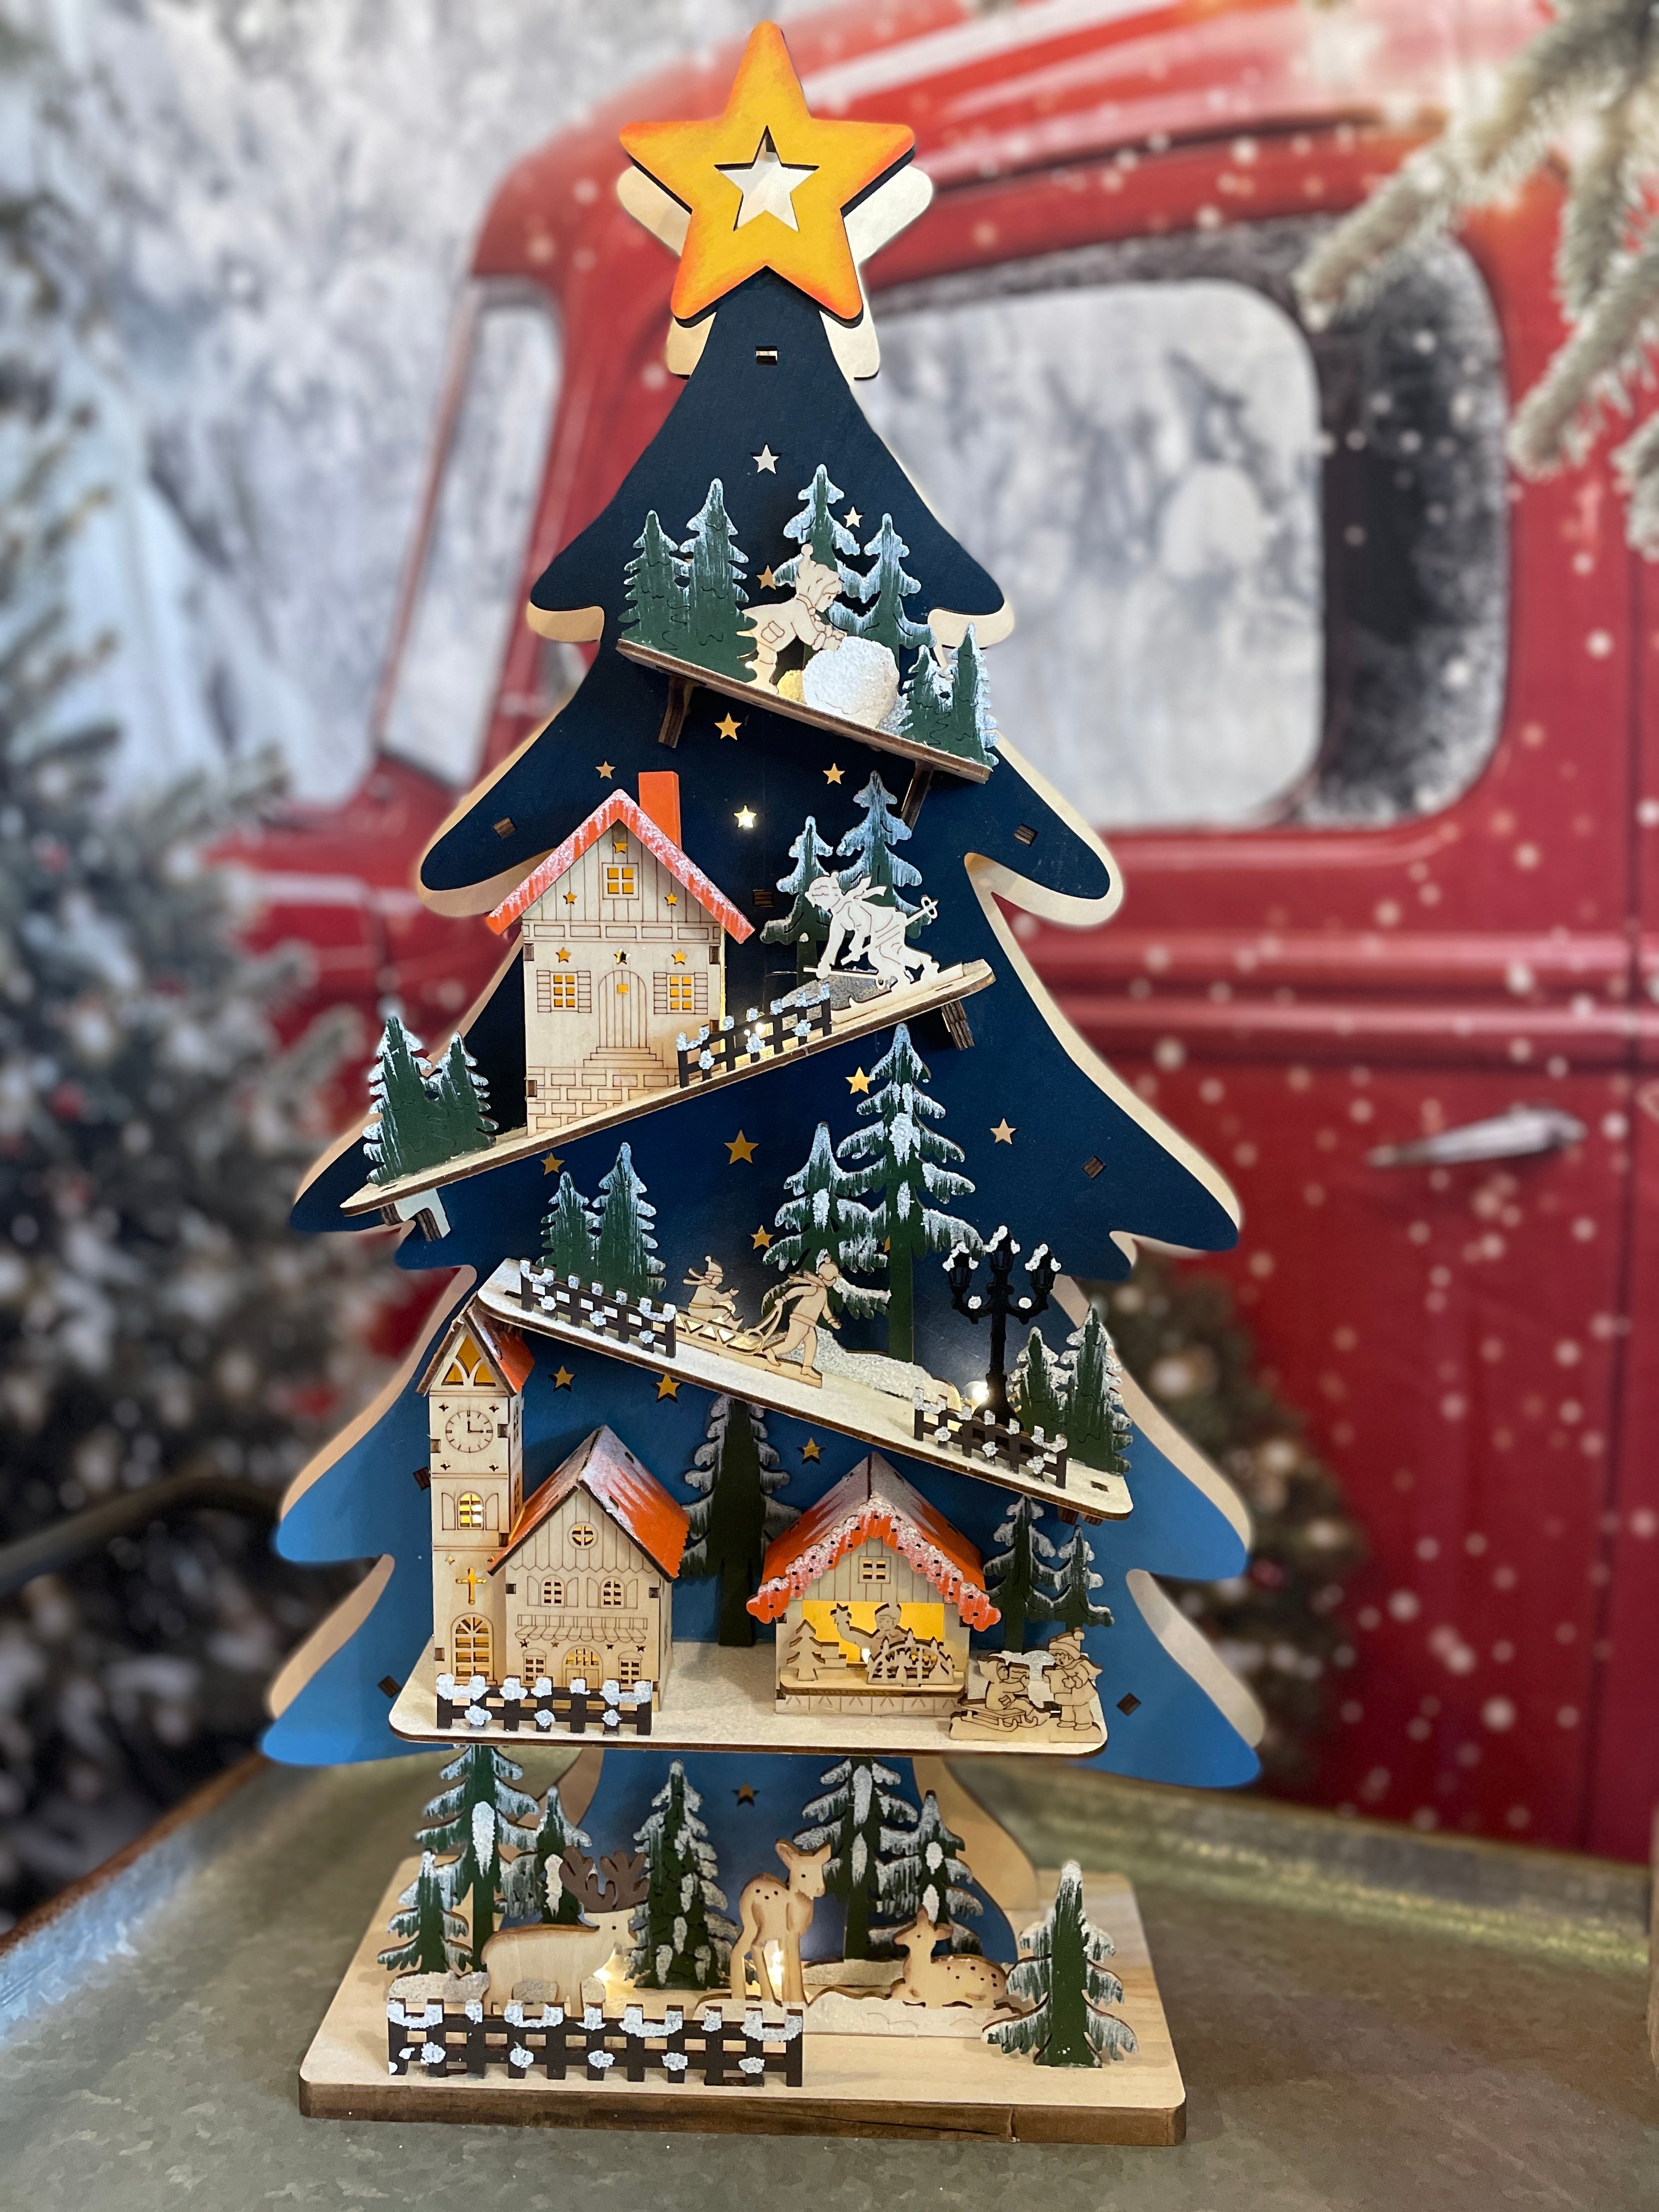 Wooden Christmas Scene, Christmas Village, Christmas Tree